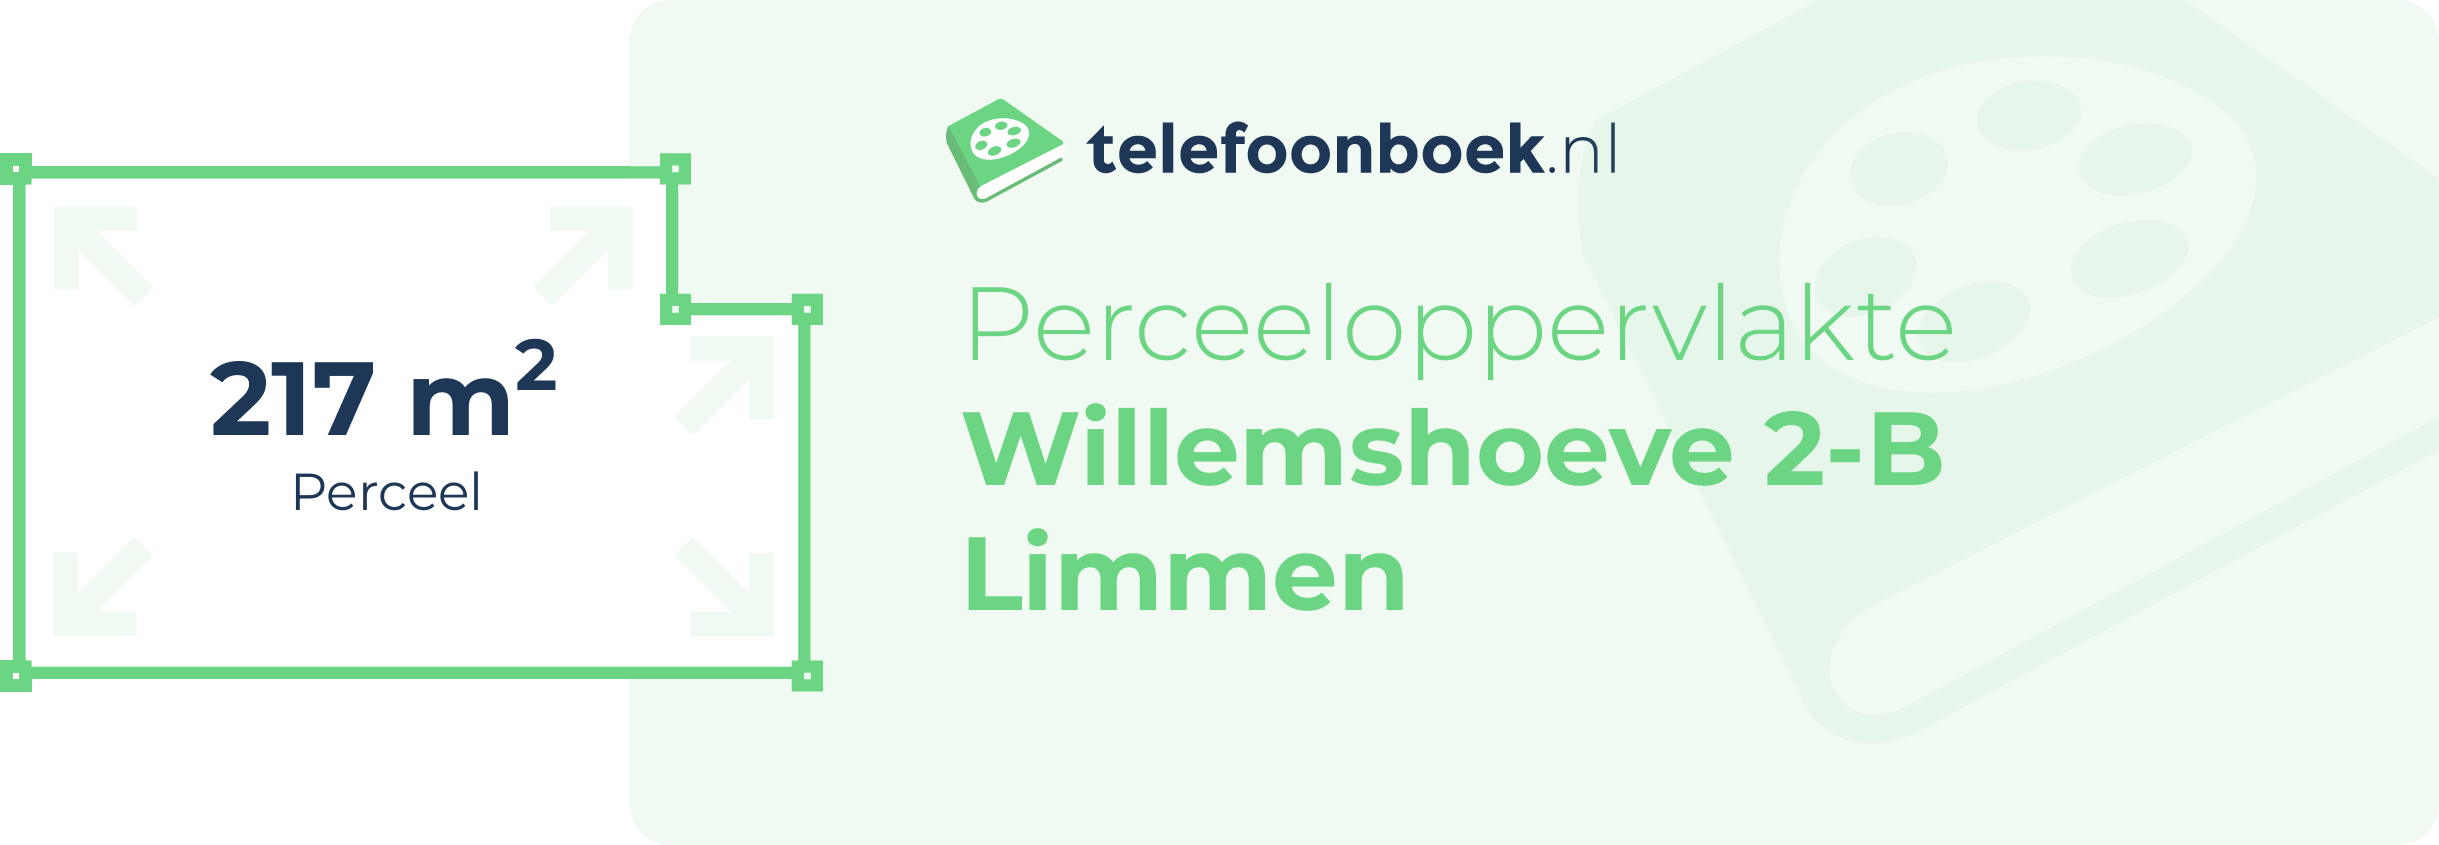 Perceeloppervlakte Willemshoeve 2-B Limmen